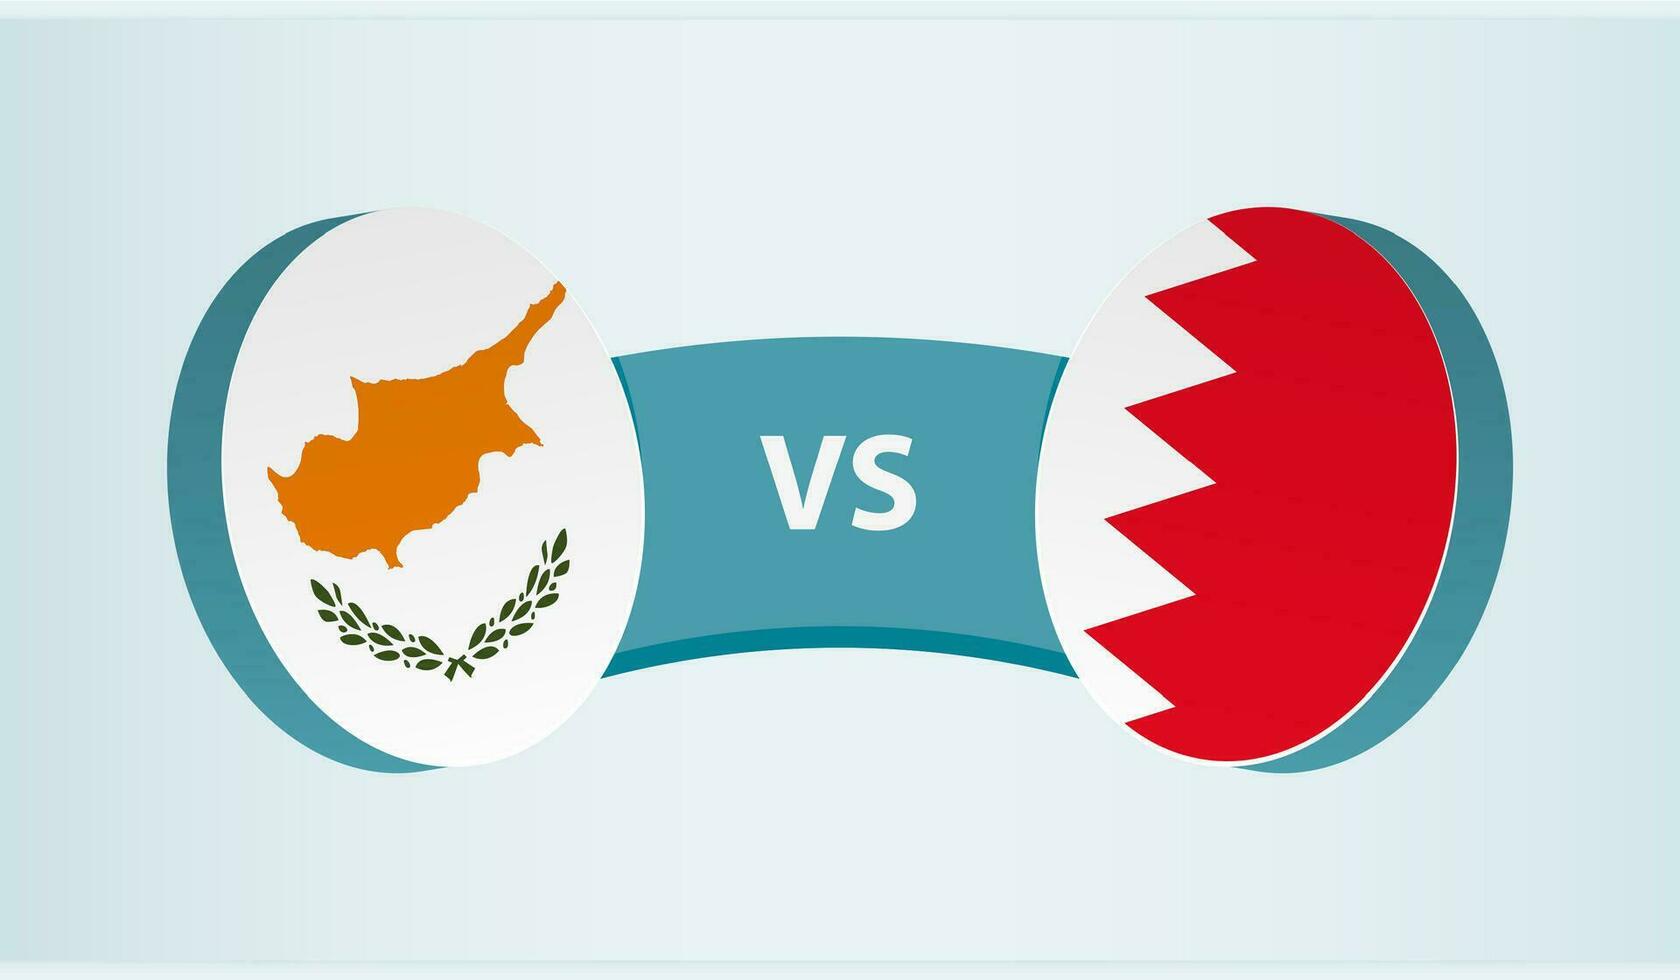 Cyprus versus Bahrain, team sports competition concept. vector